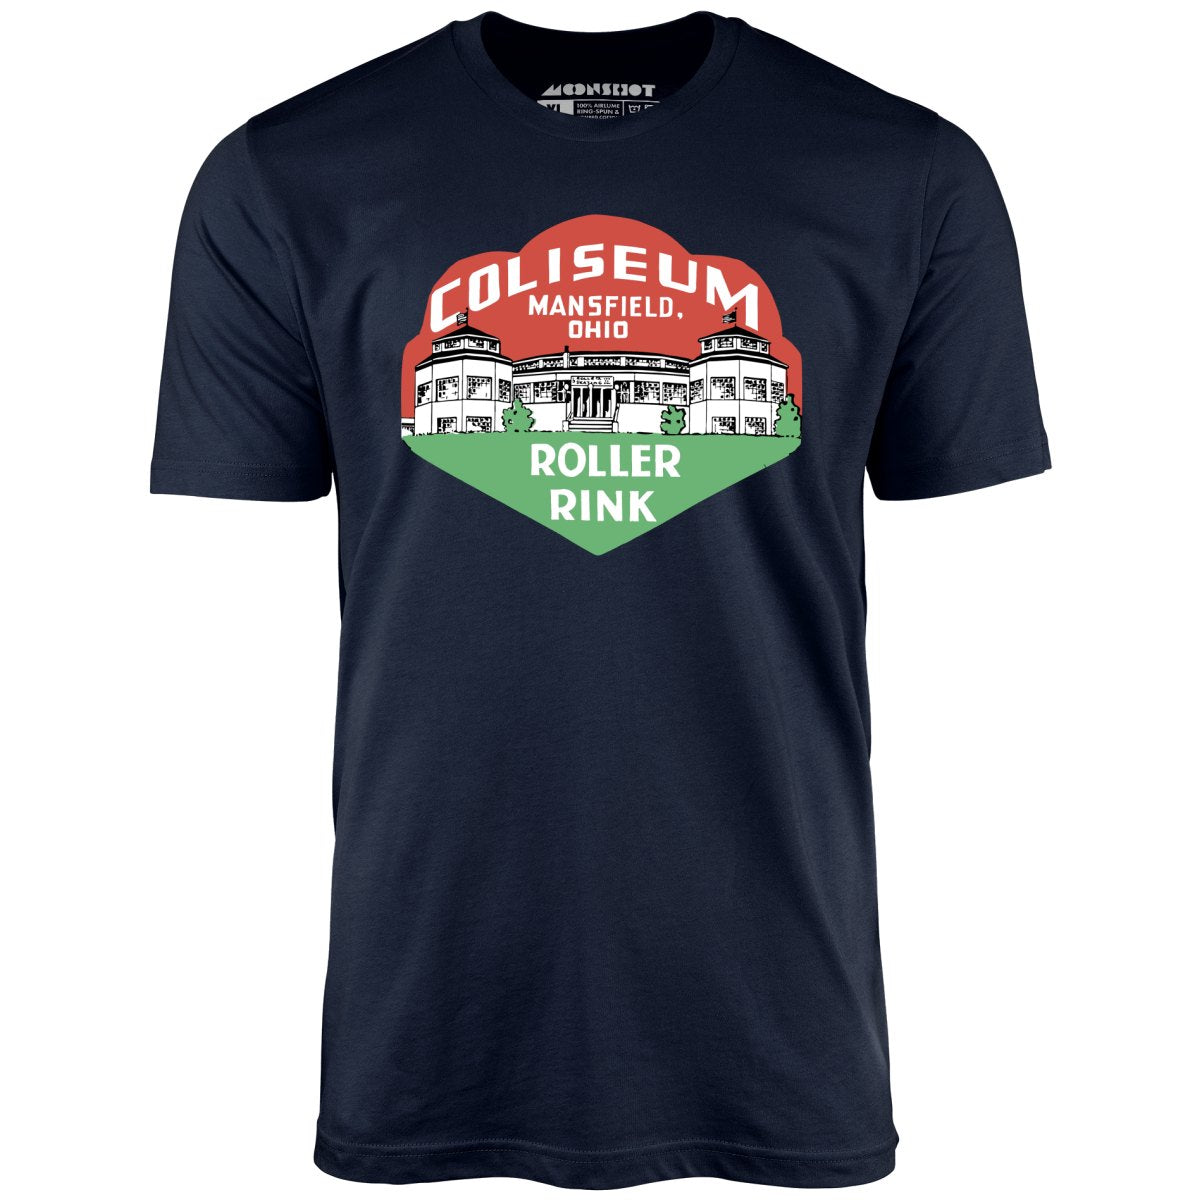 Coliseum - Mansfield, OH - Vintage Roller Rink - Unisex T-Shirt